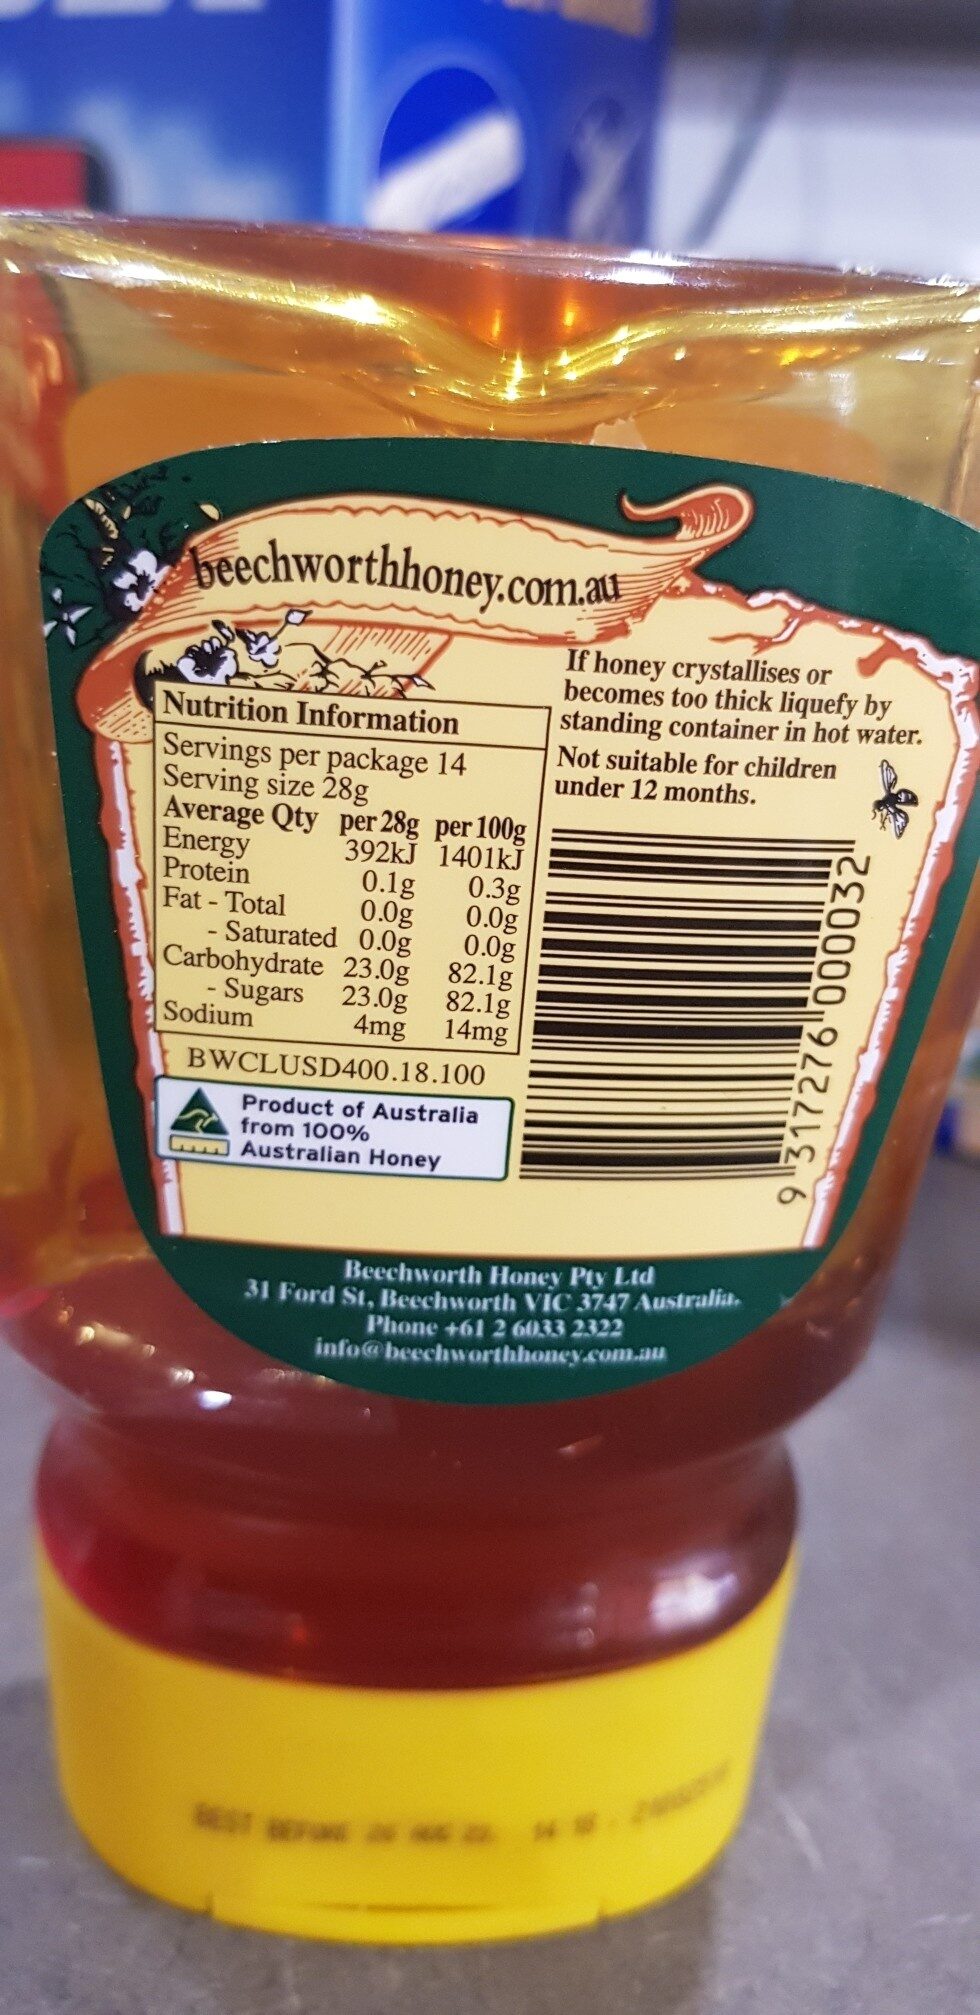 Pure beechworth honey - Ingredients